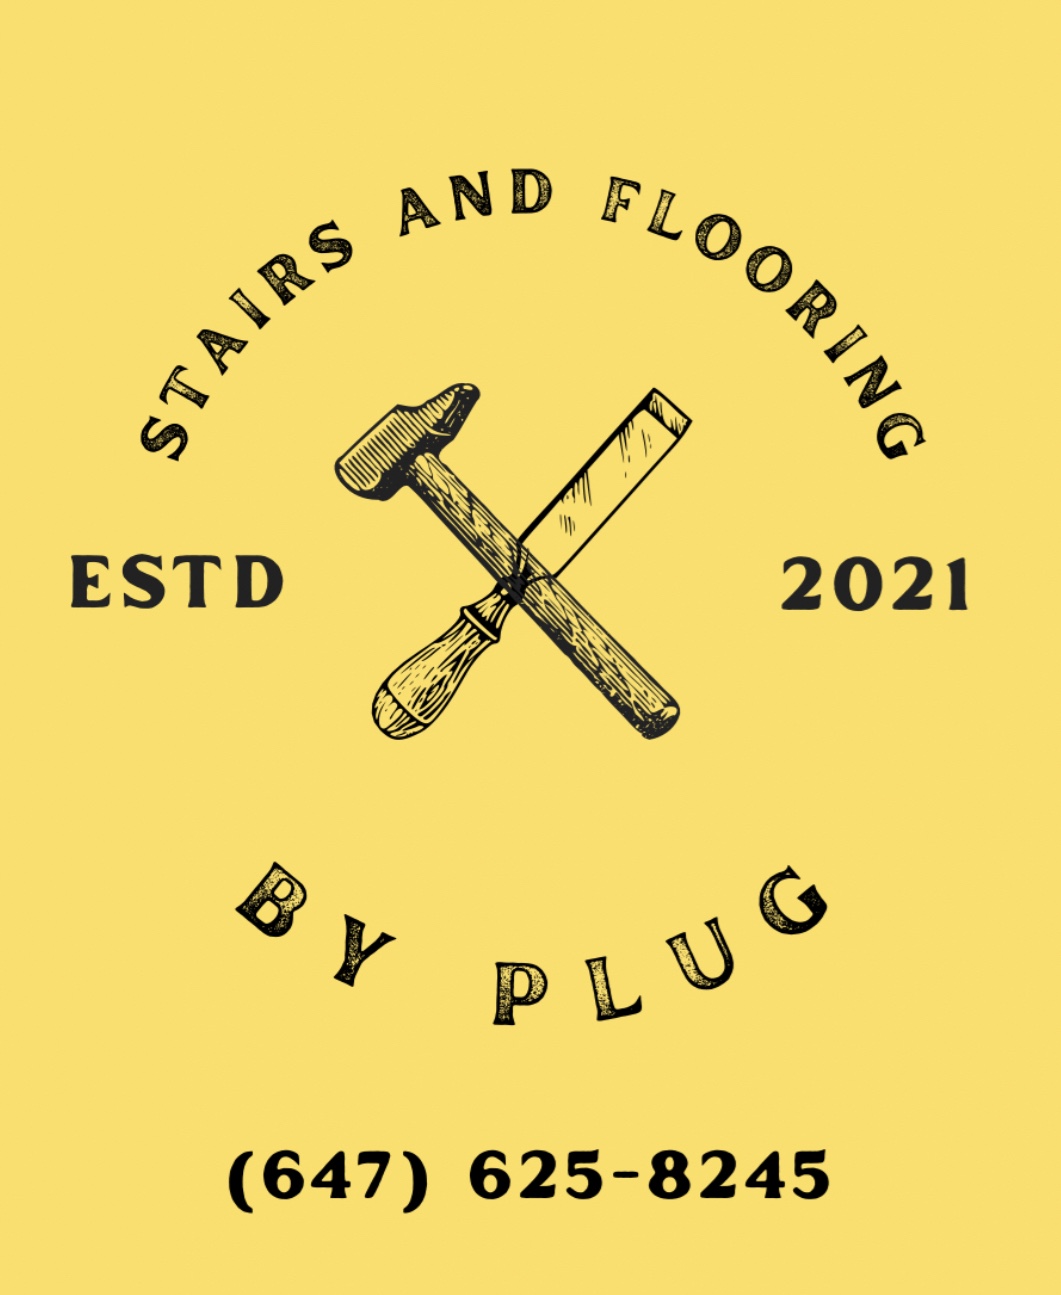 Prabh Flooring's logo